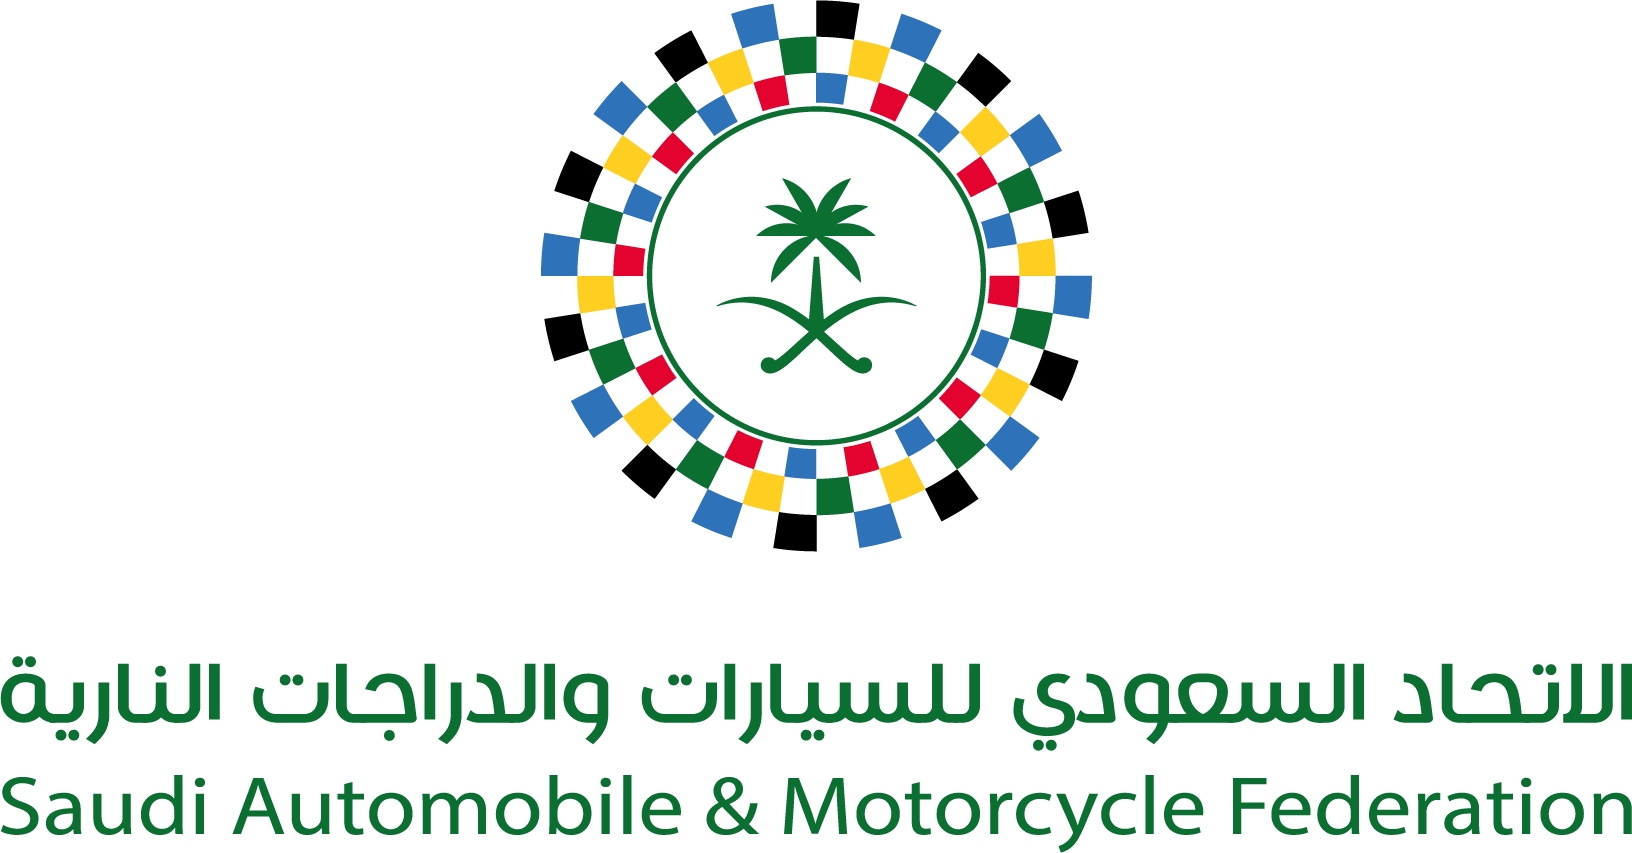 Saudi Automobile & Motorcycle Federation